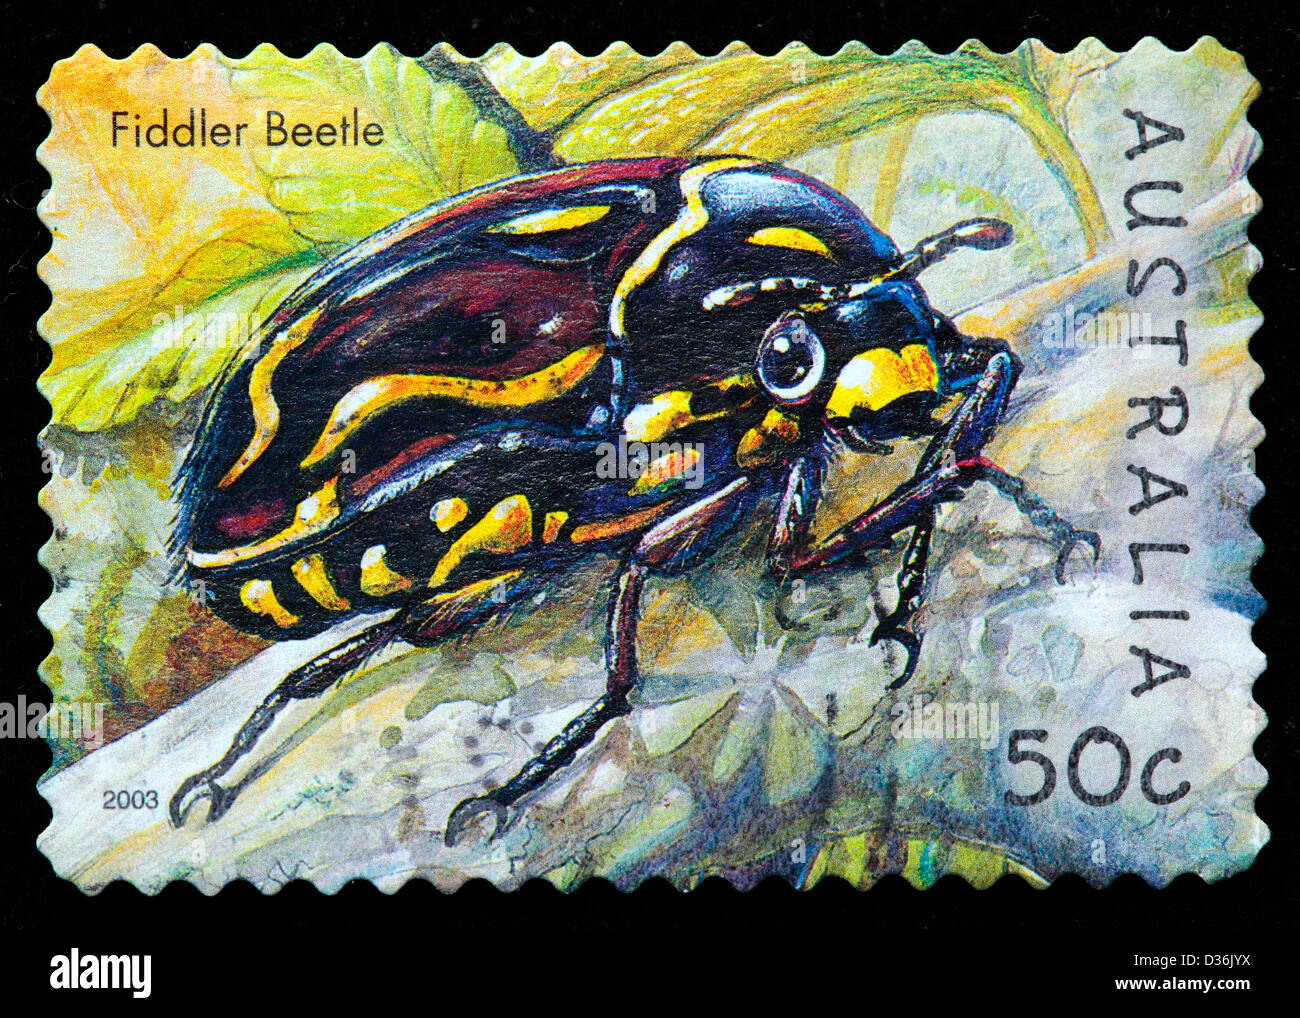 Fiddler beetle, postage stamp, Australia, 2003 Stock Photo